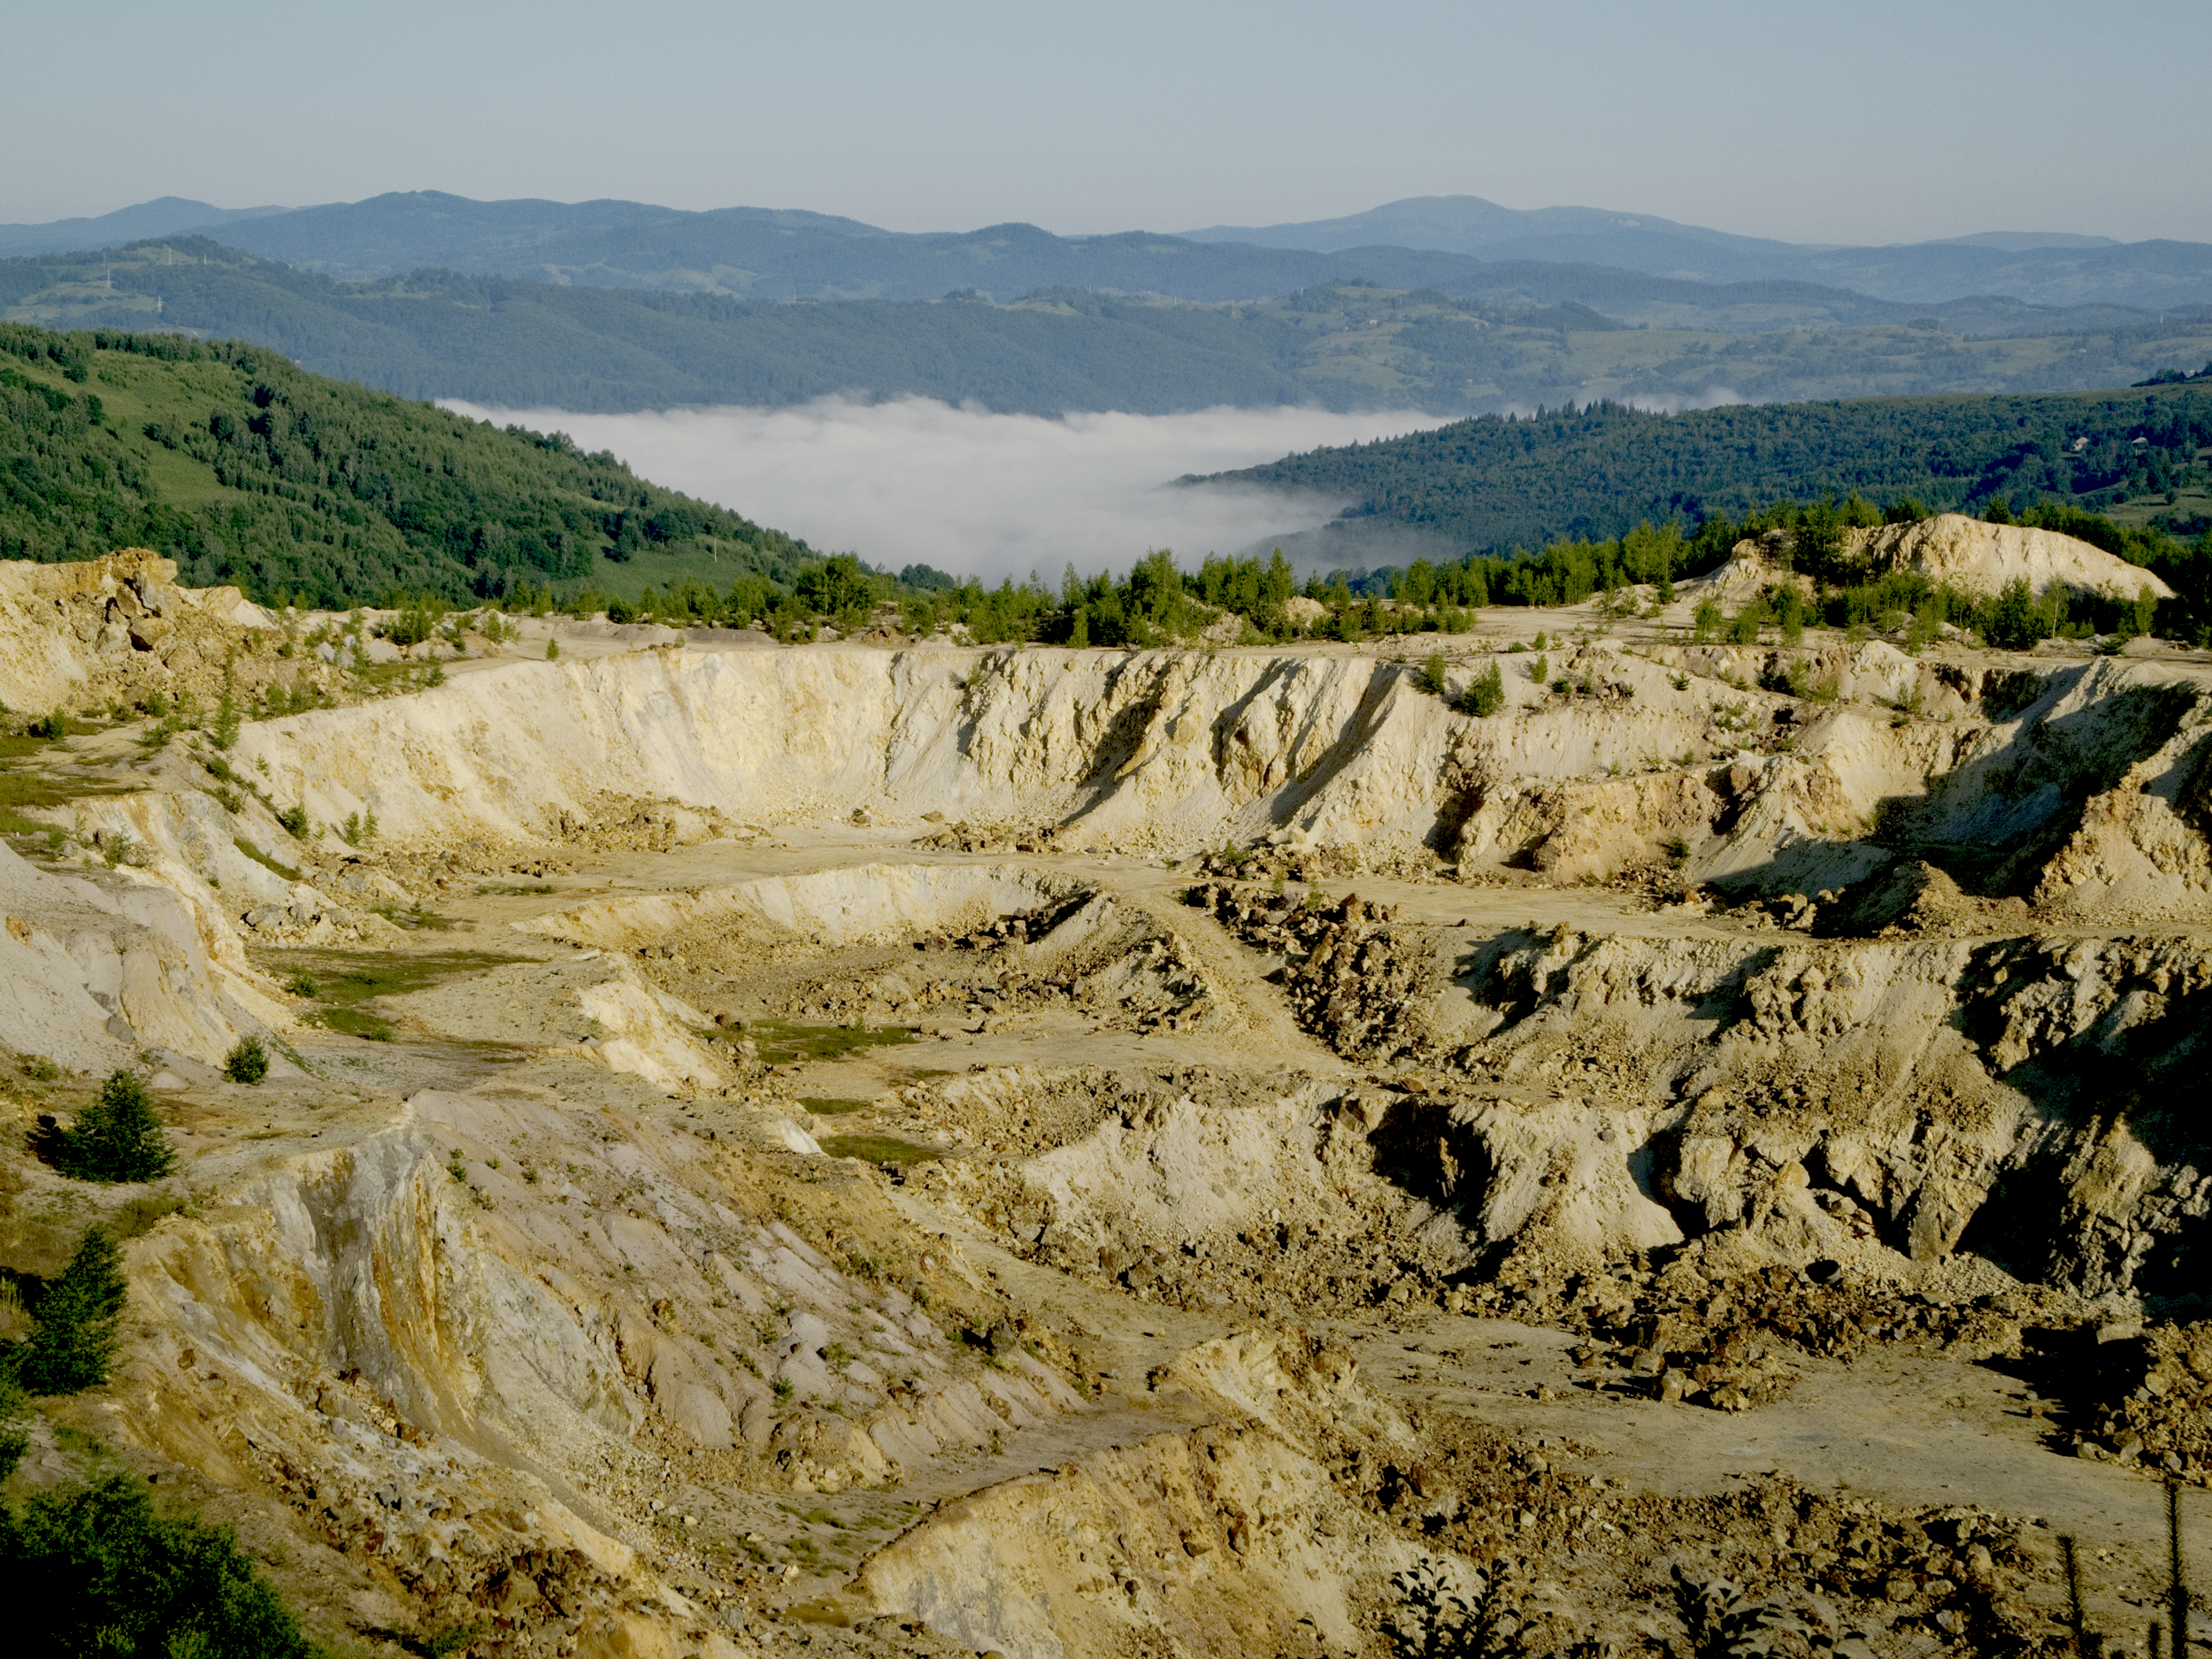 A cetate pit that shows the destruction that open-pit mining creates.